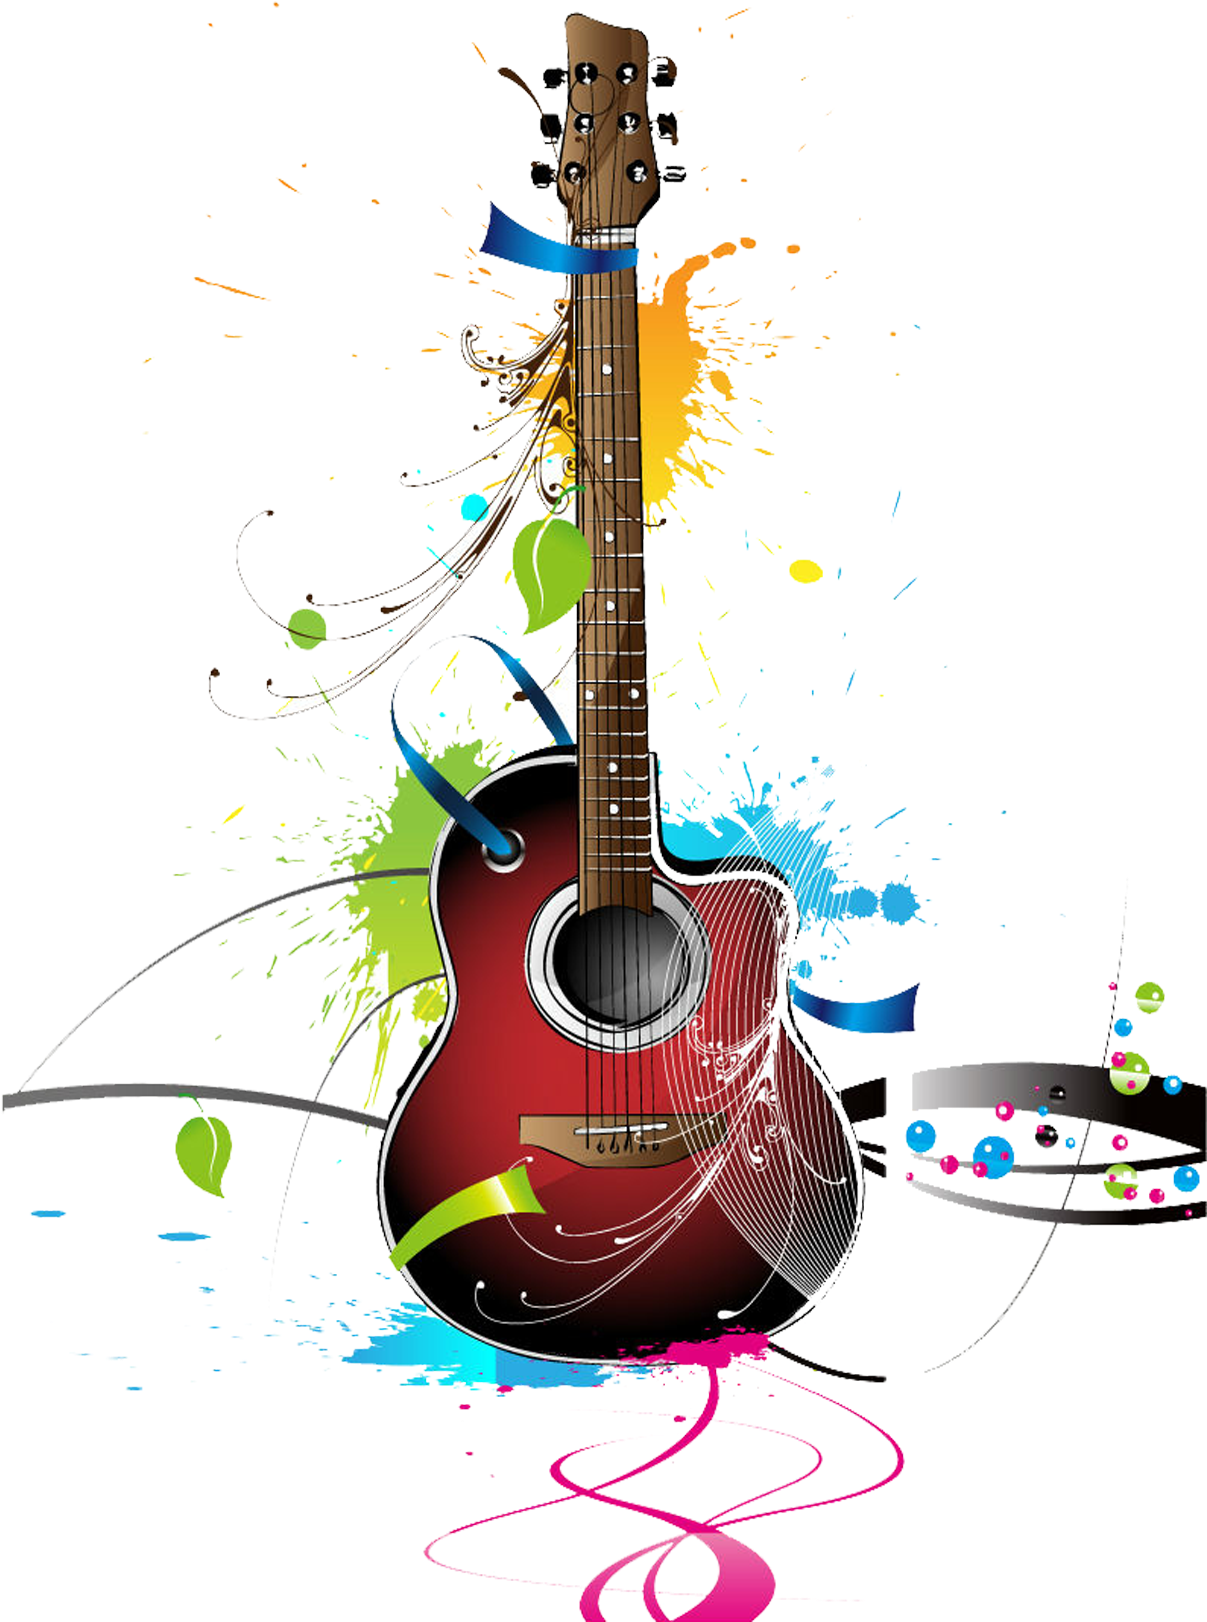 Guitar Music Shutterstock Illustration - Guitar Music Shutterstock Illustration (2362x2362)